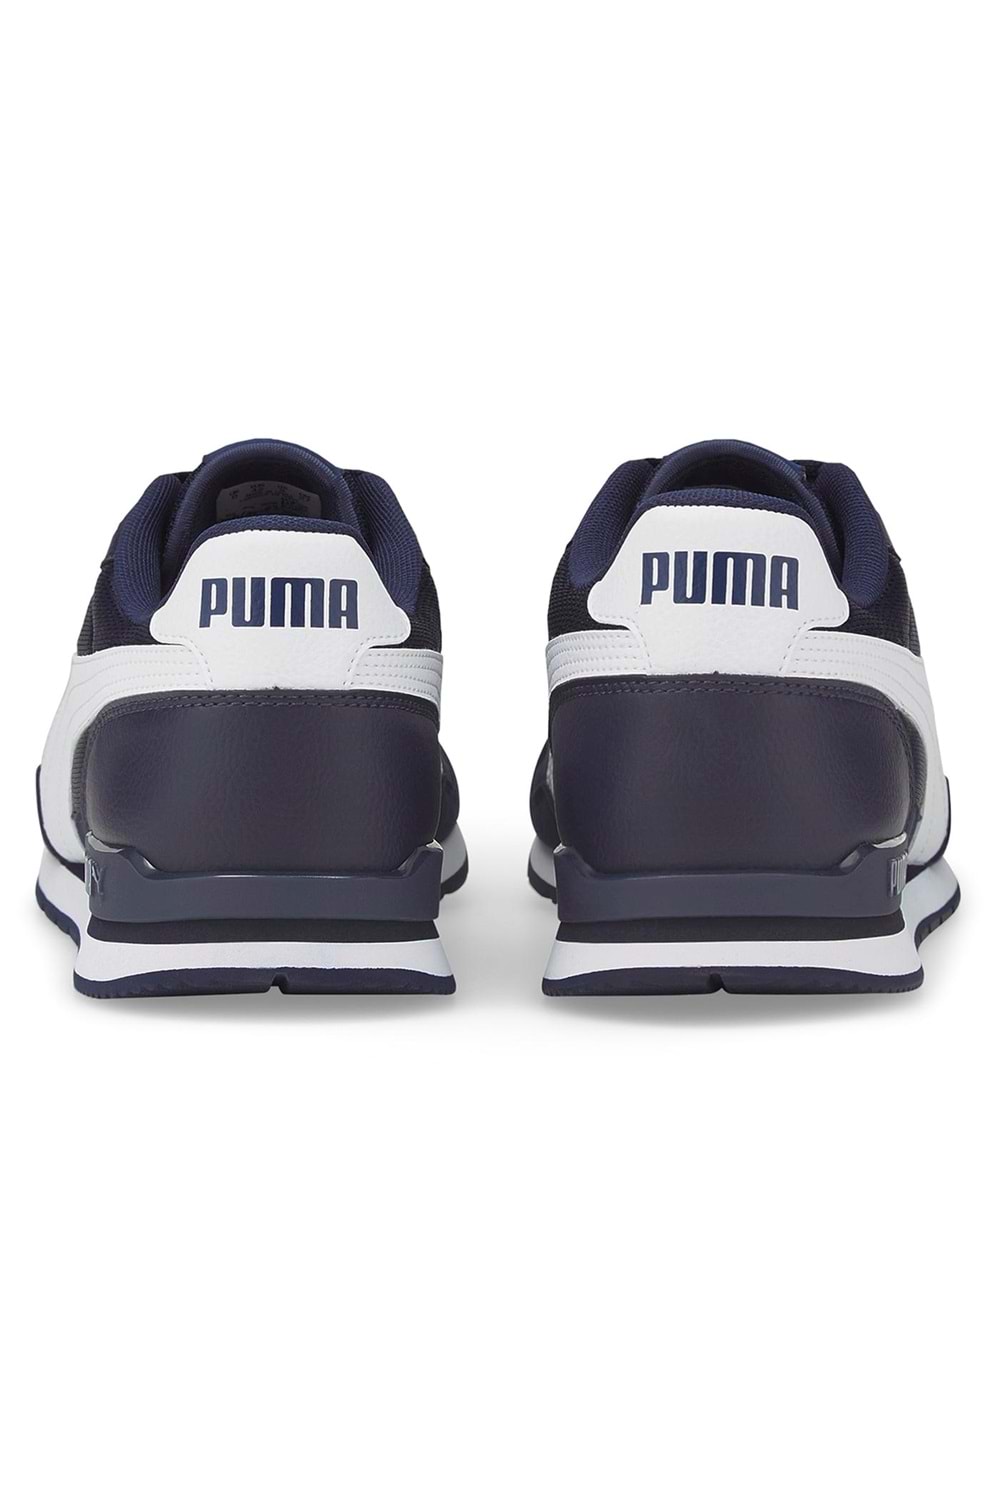 Puma ST Runner V3 Mesh Erkek Laciver Günlük Spor Ayakkabı 38464002